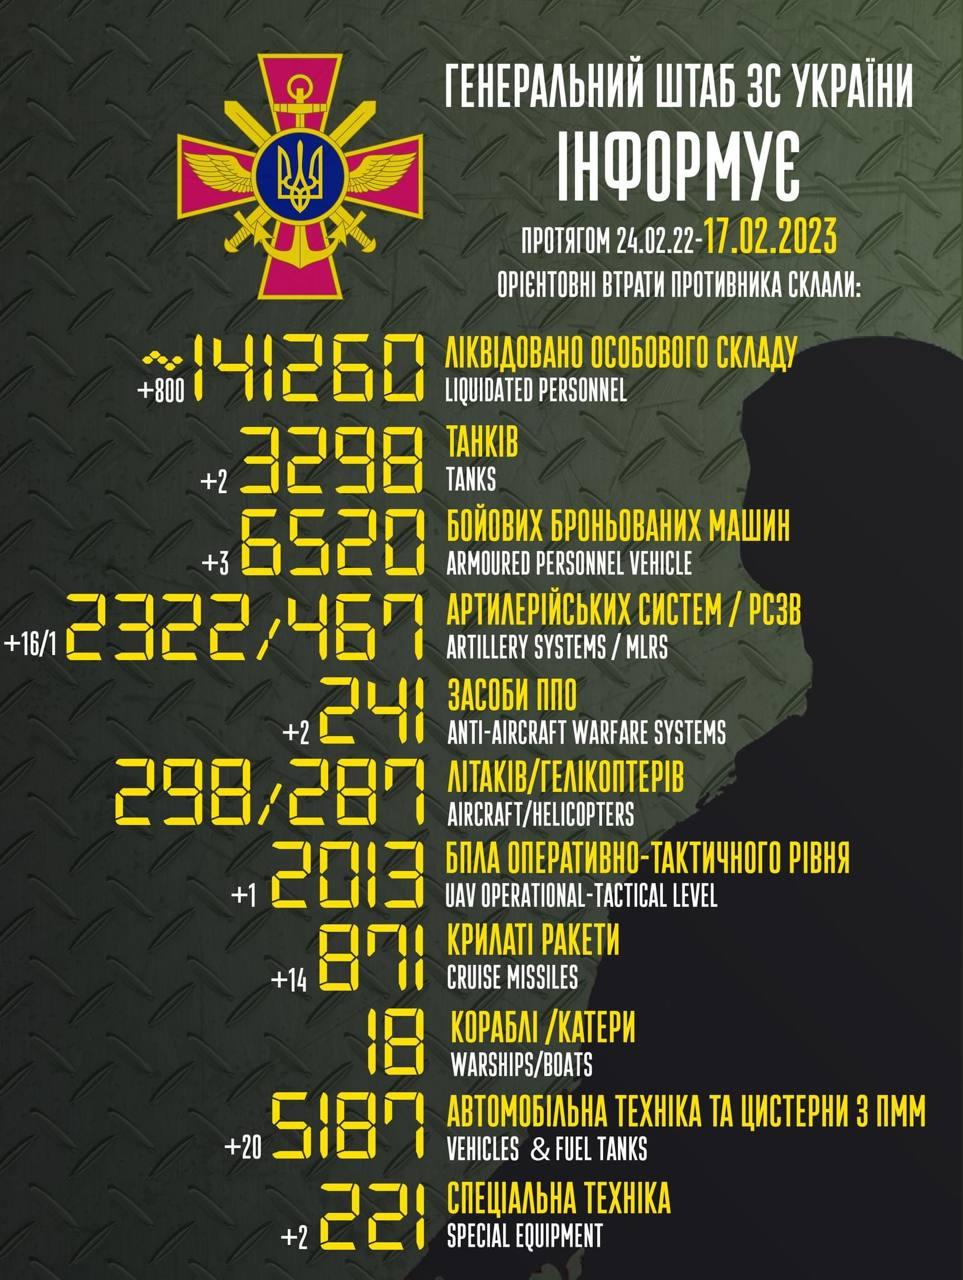 Russia’s losses in Ukraine as of 17/02/2023